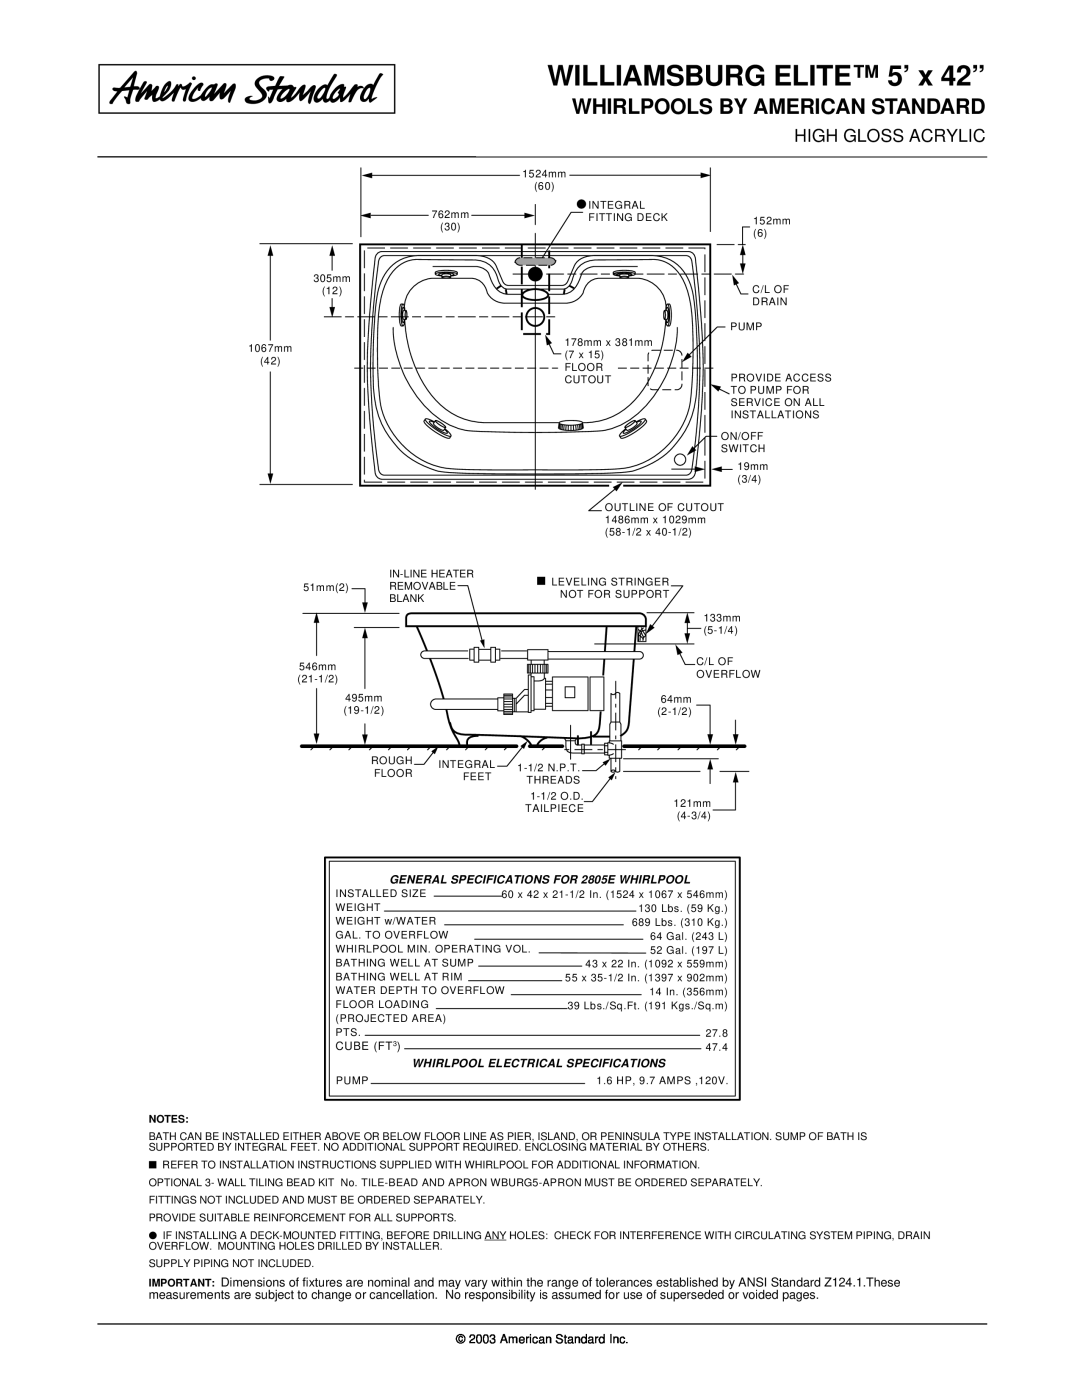 American Standard 2805EC WILLIAMSBURG ELITE 5’ x 42”, Whirlpools By American Standard, CUBE FT3, American Standard Inc 